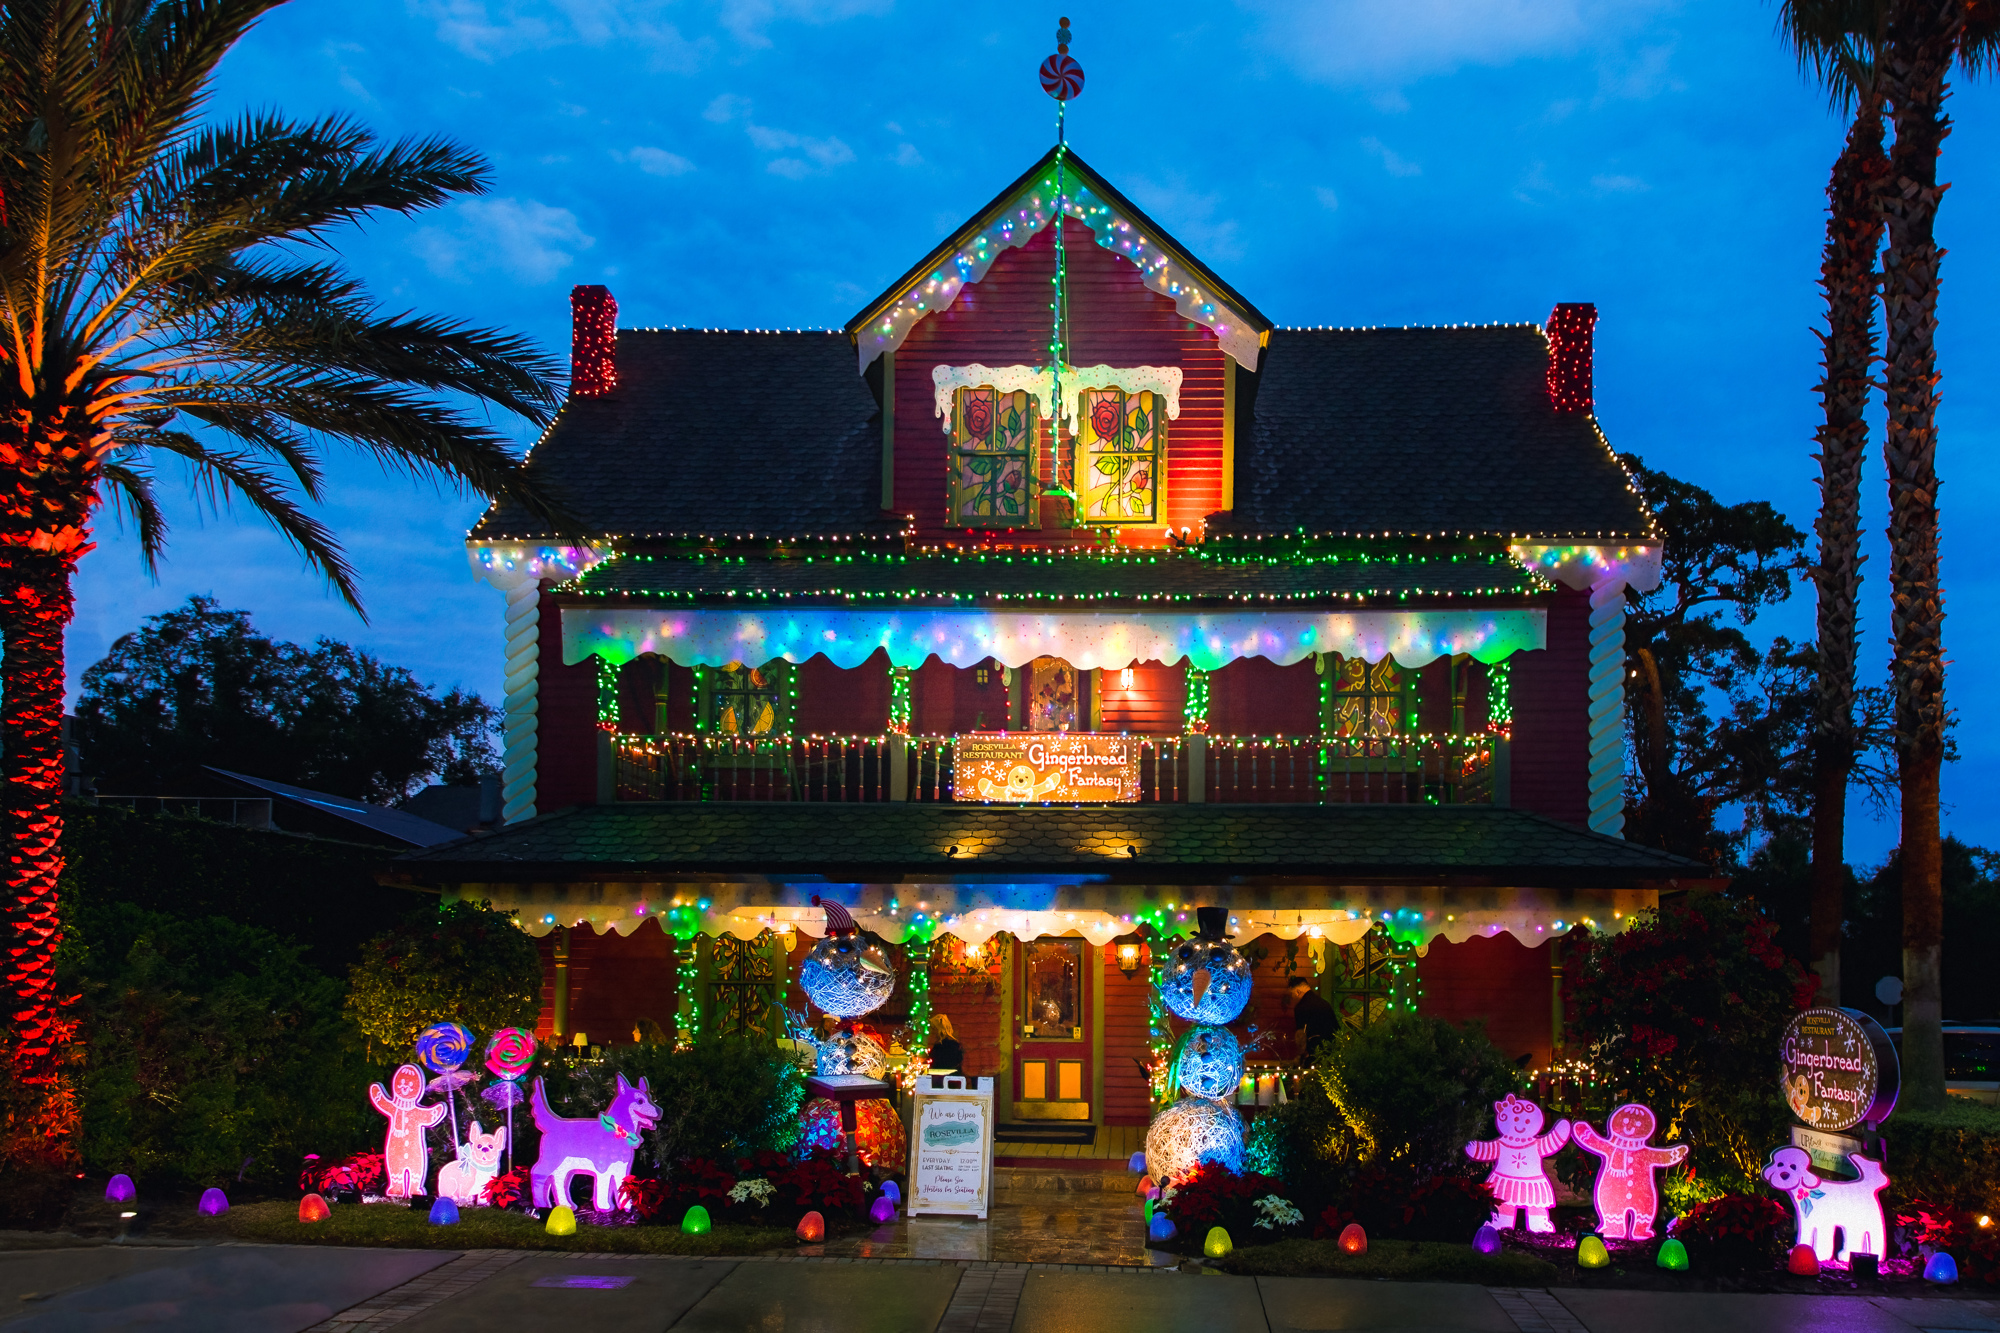 A look at Rose Villa's Gingerbread Fantasy display after dark. Courtesy photo